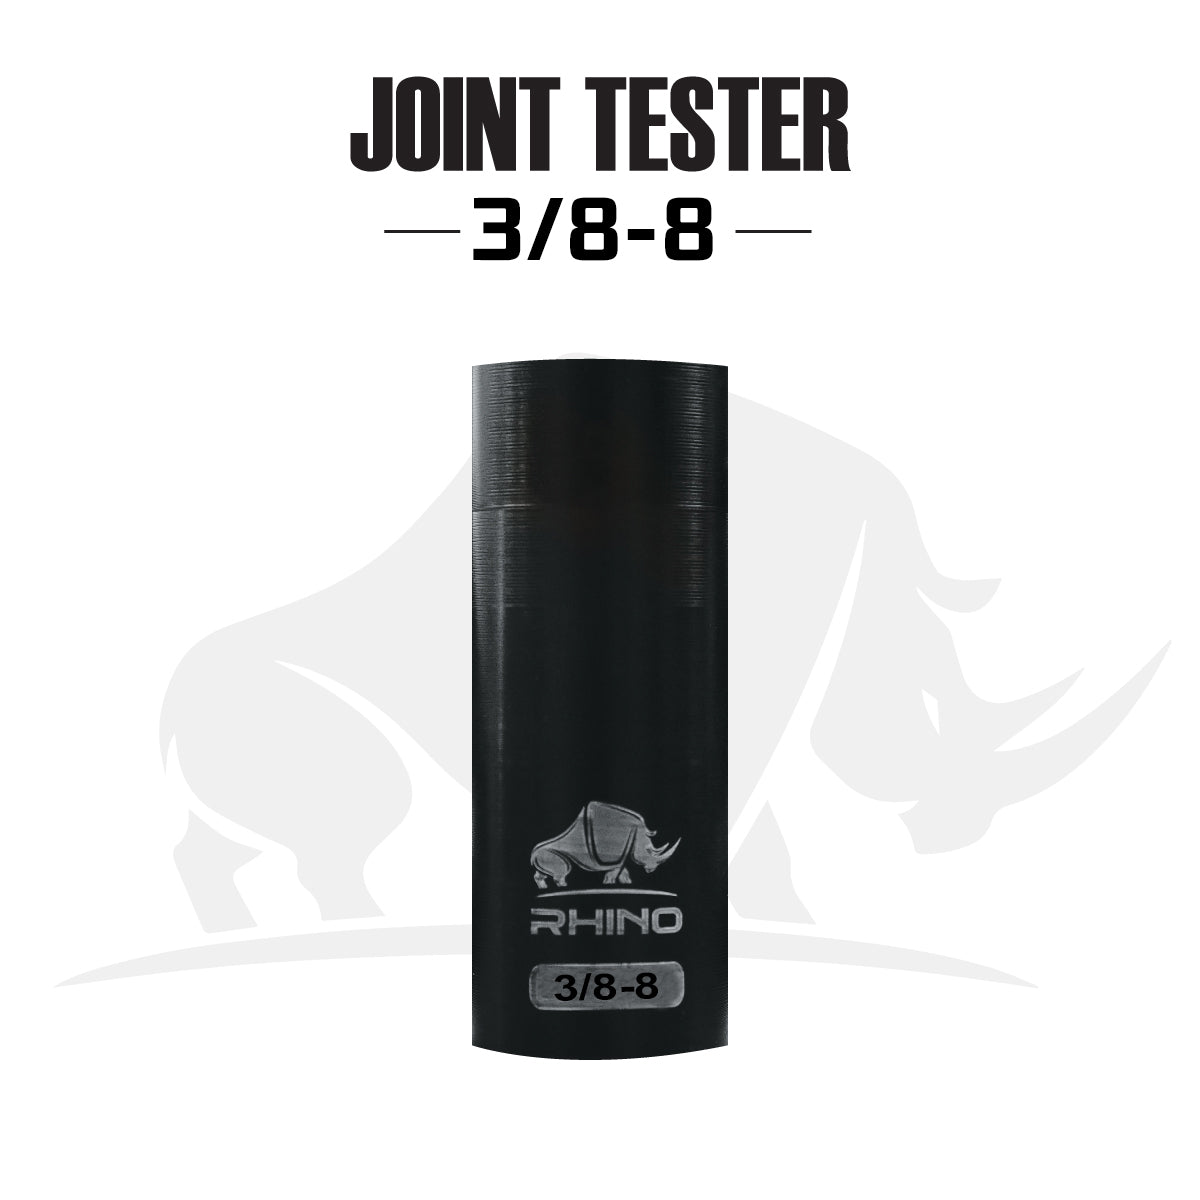 RHINO 3/8-8 Joint Tester